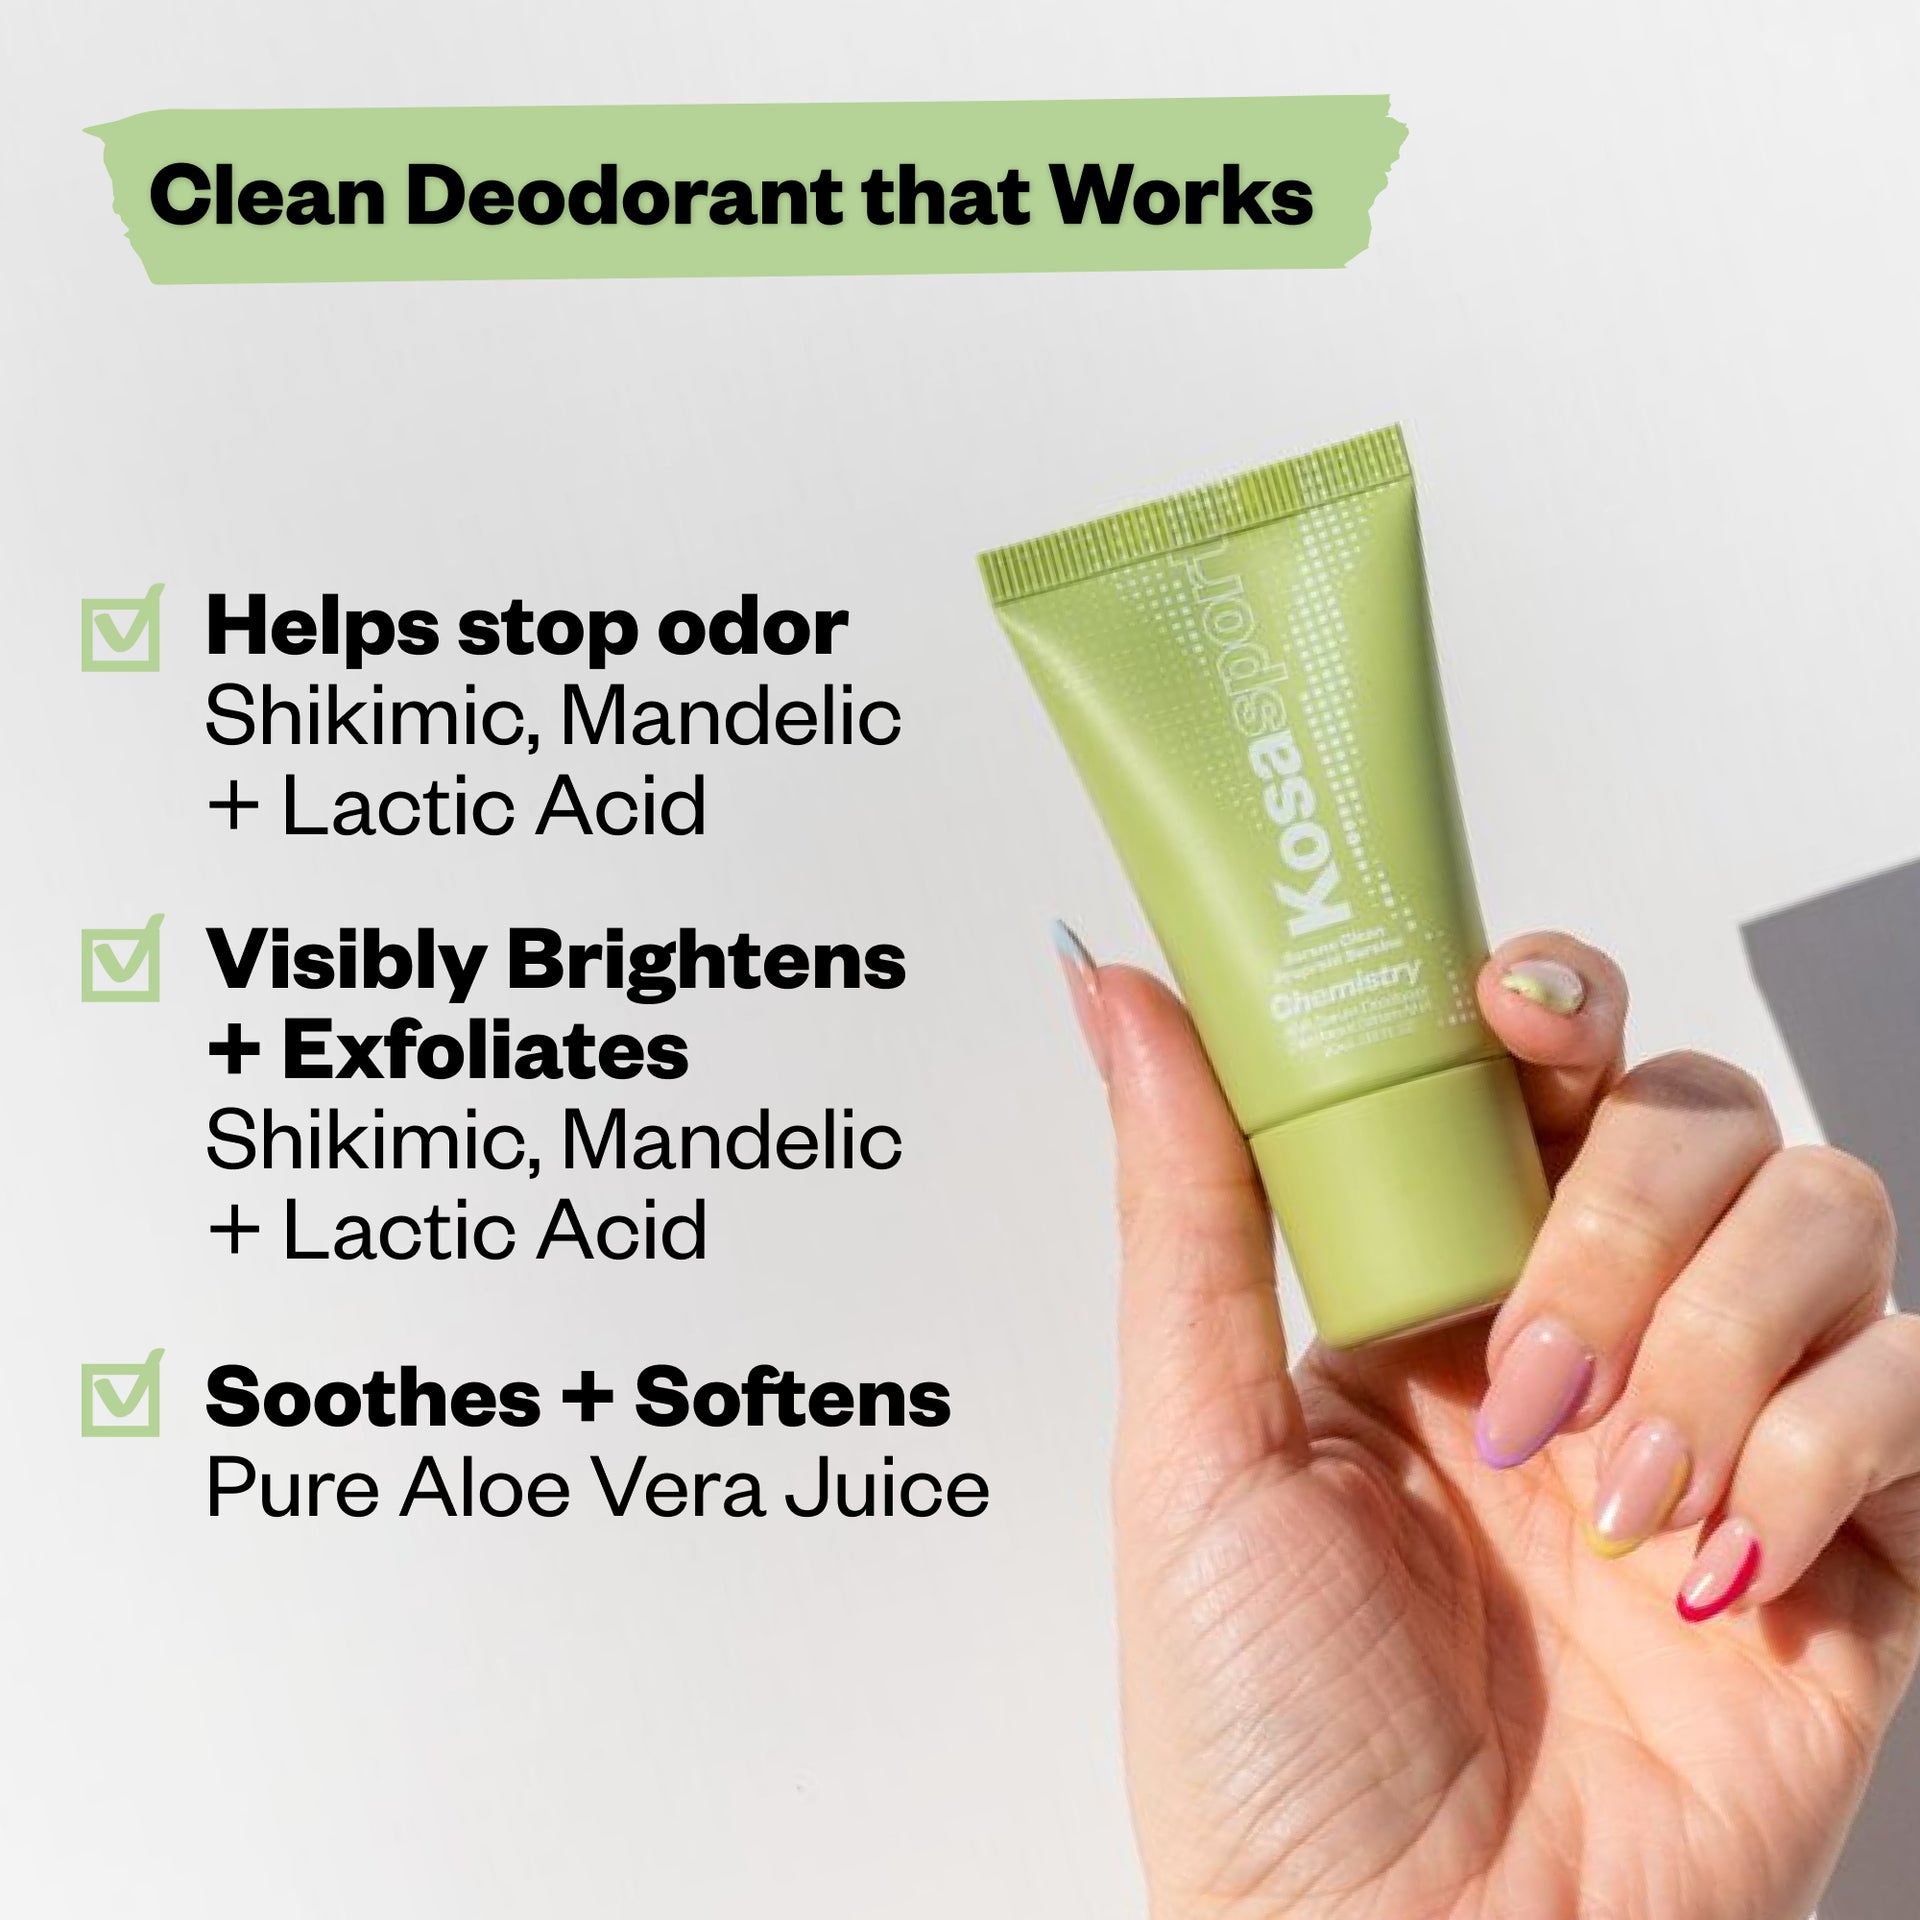 Chemistry deodorant - Clean Deodorant that works